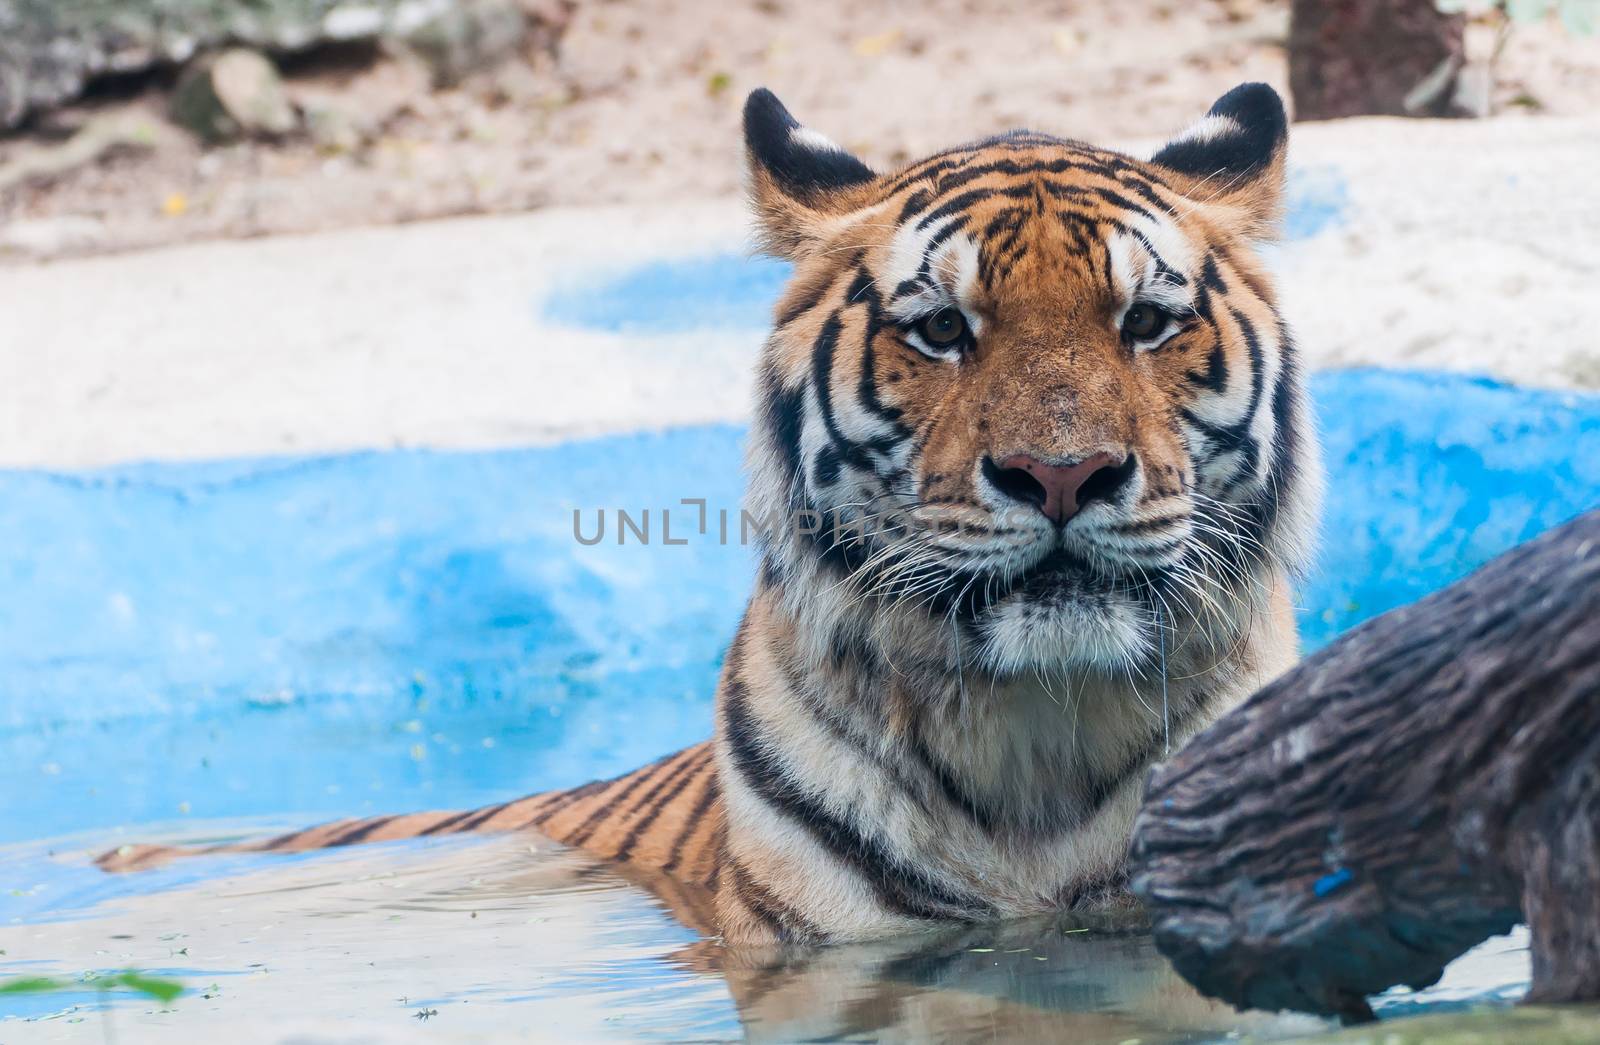 Tiger in water  by Sorapop